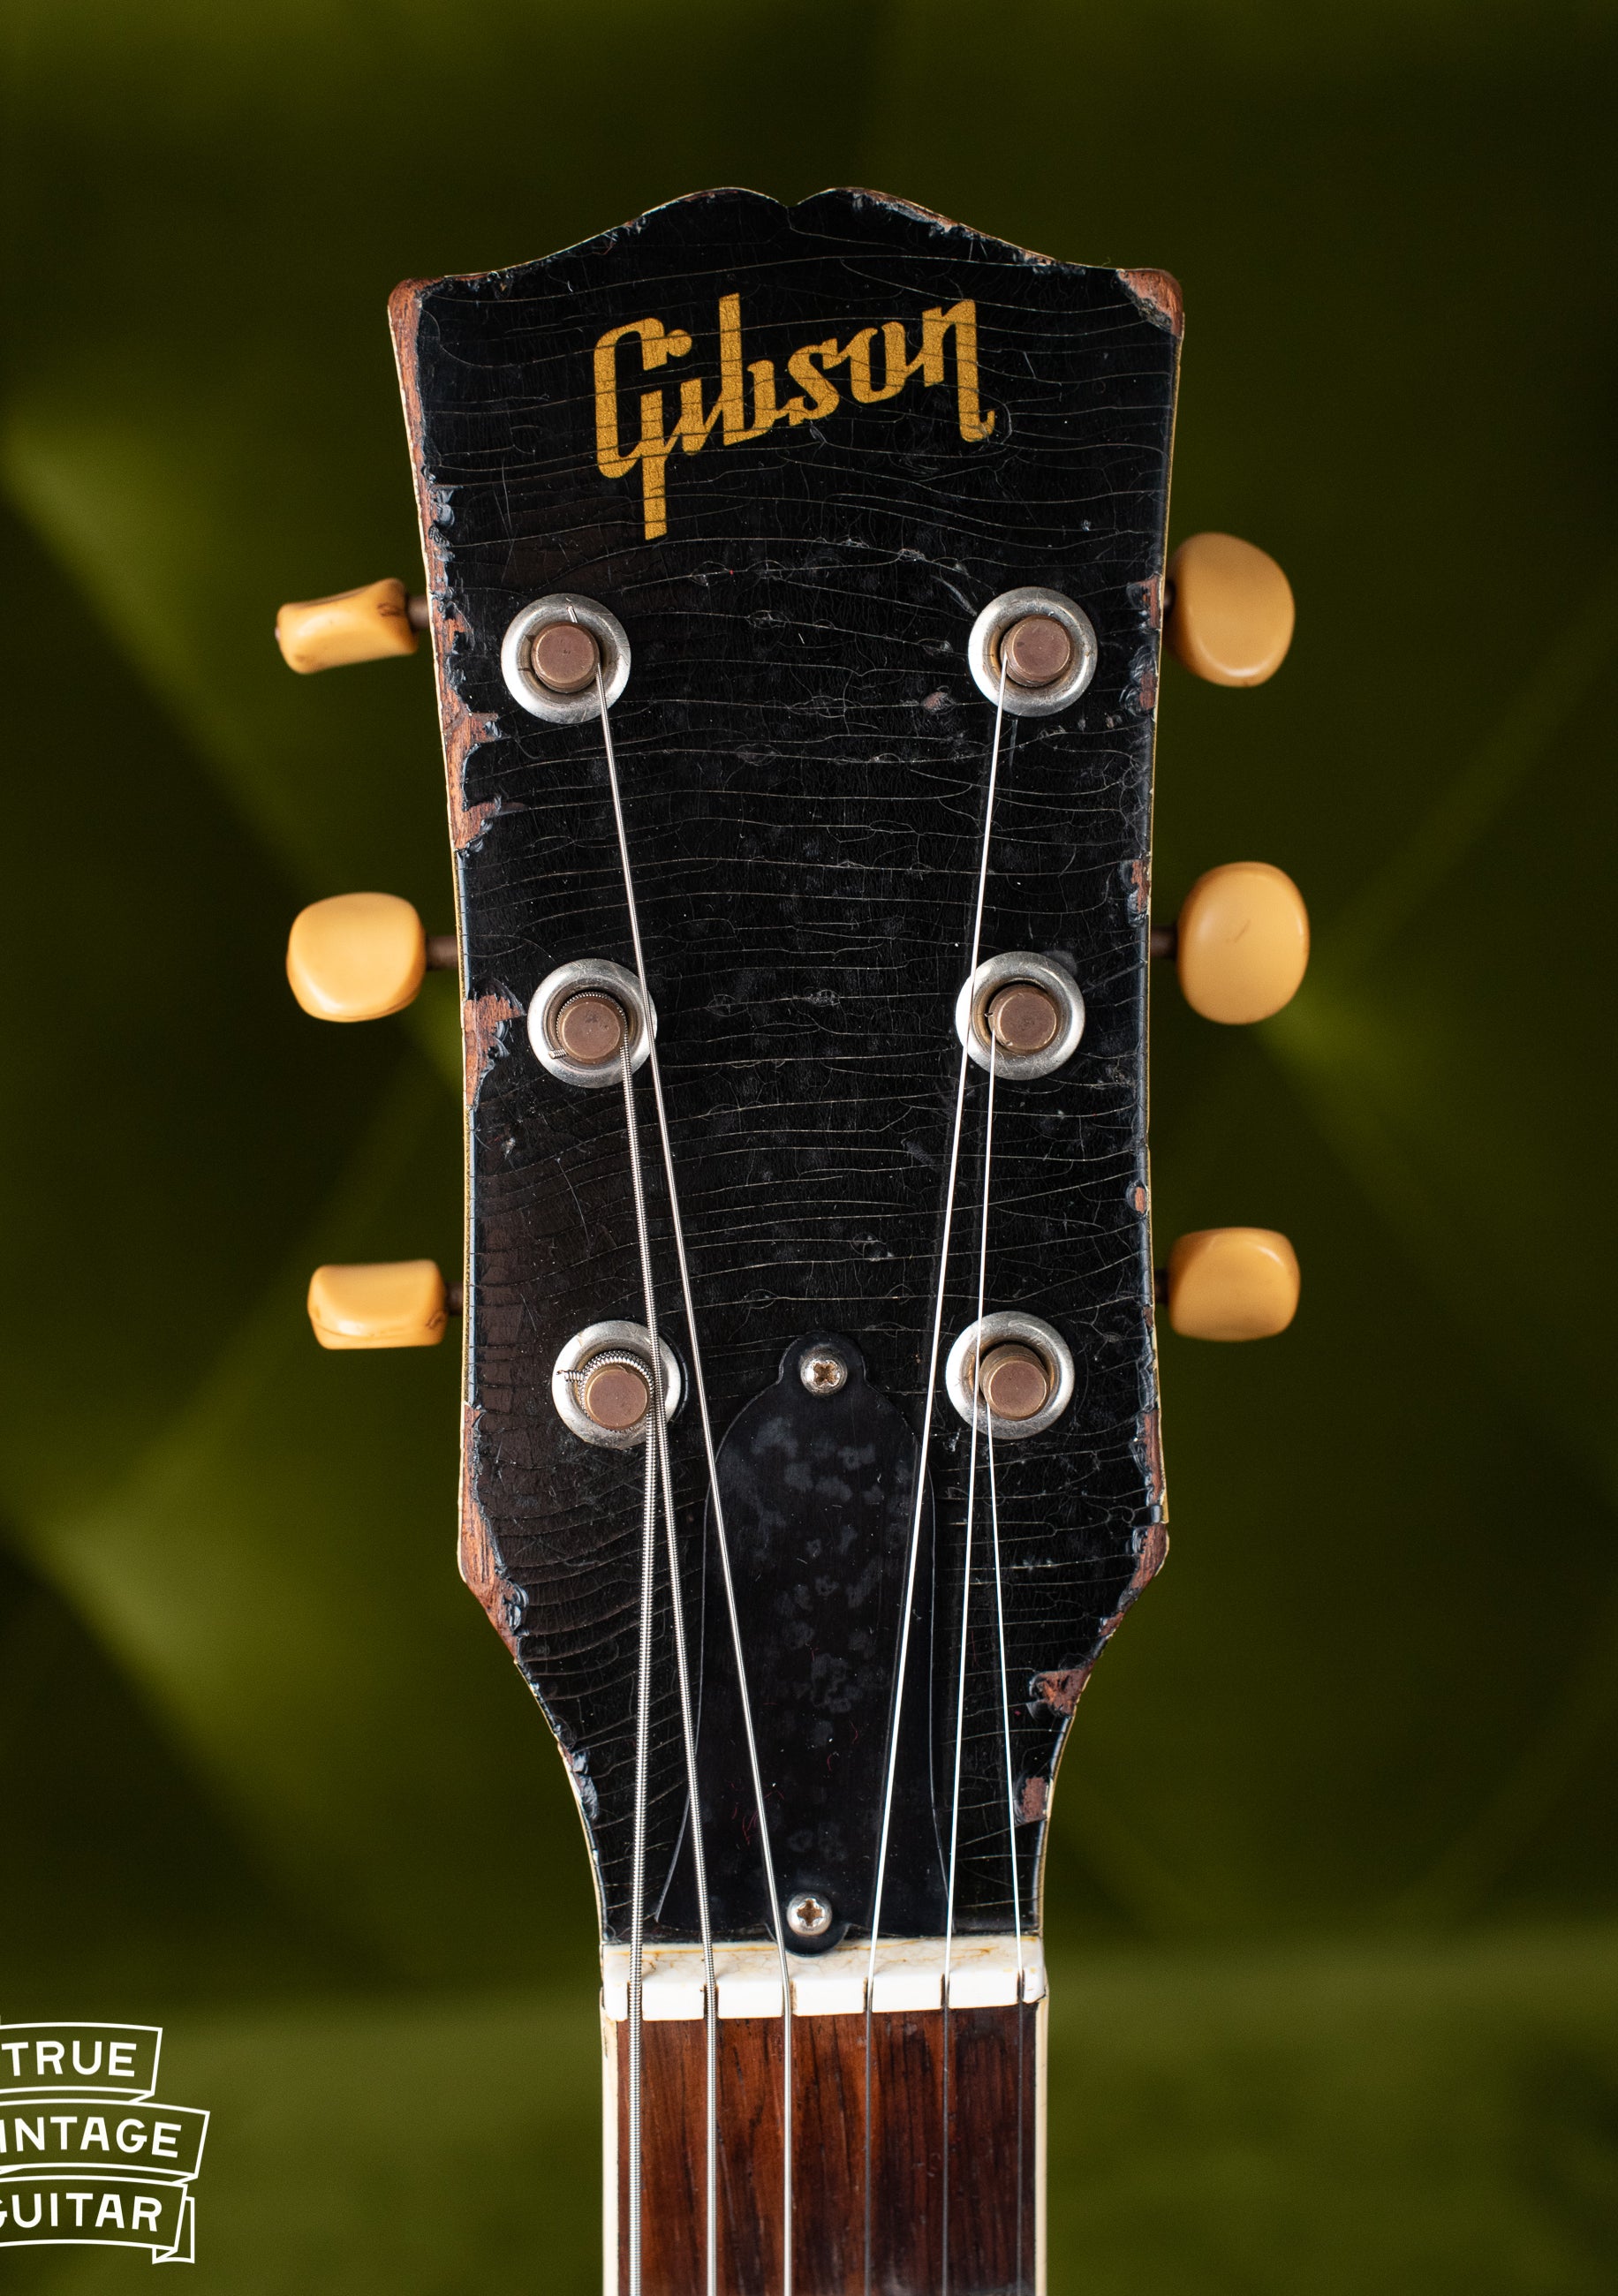 Neck, 1965 Gibson SG Junior white